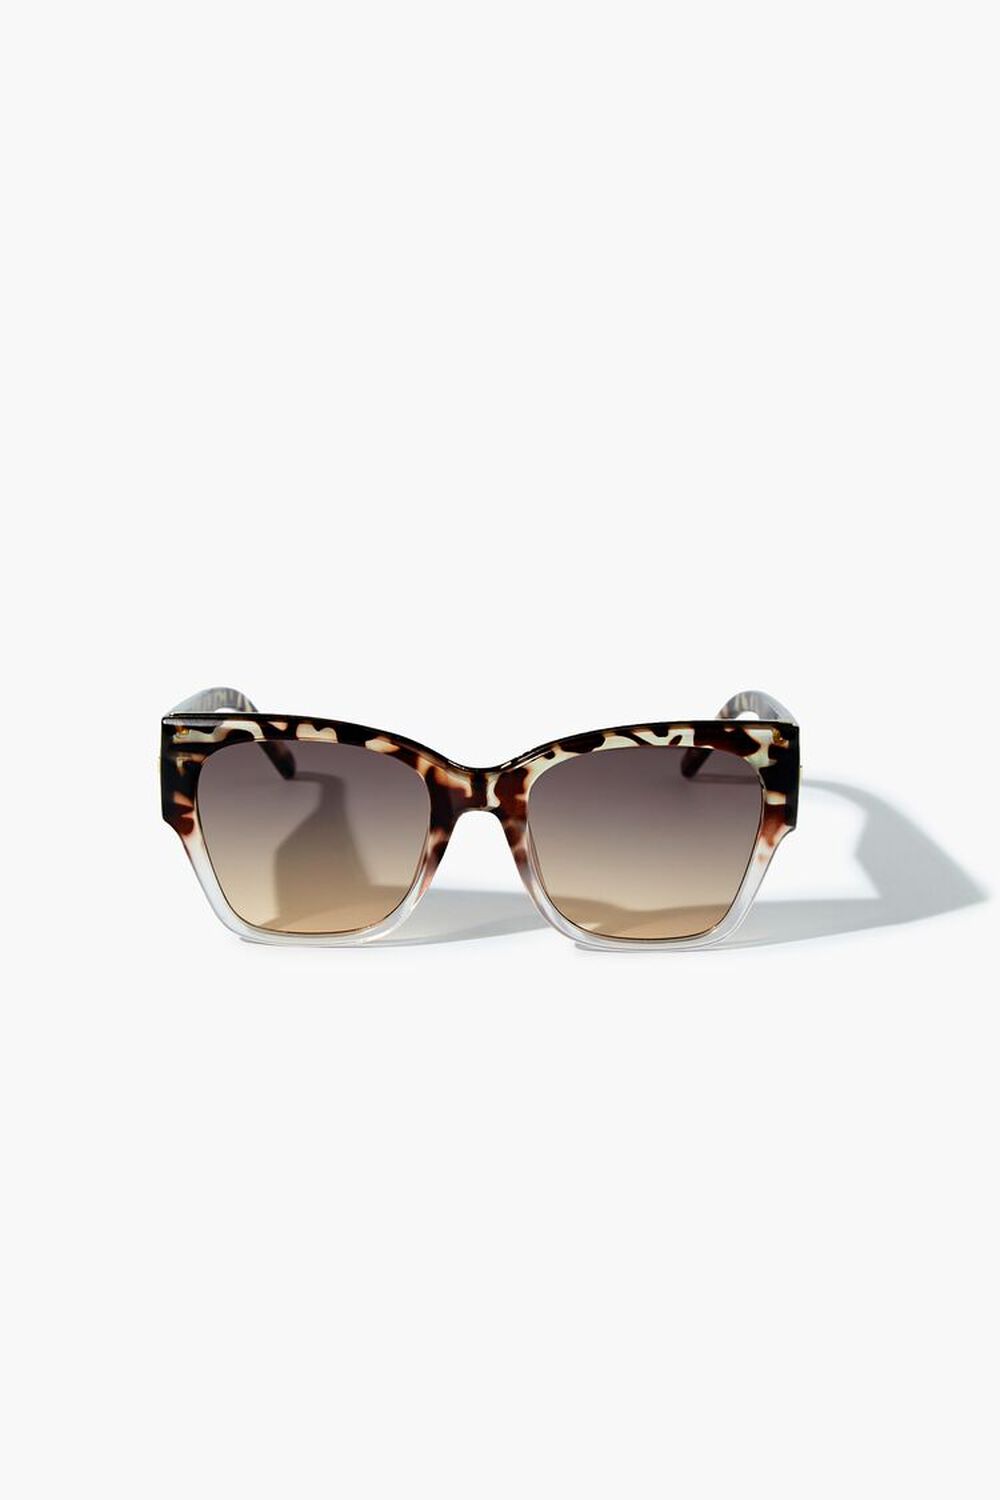 BROWN/BROWN Tortoiseshell Square Sunglasses, image 1